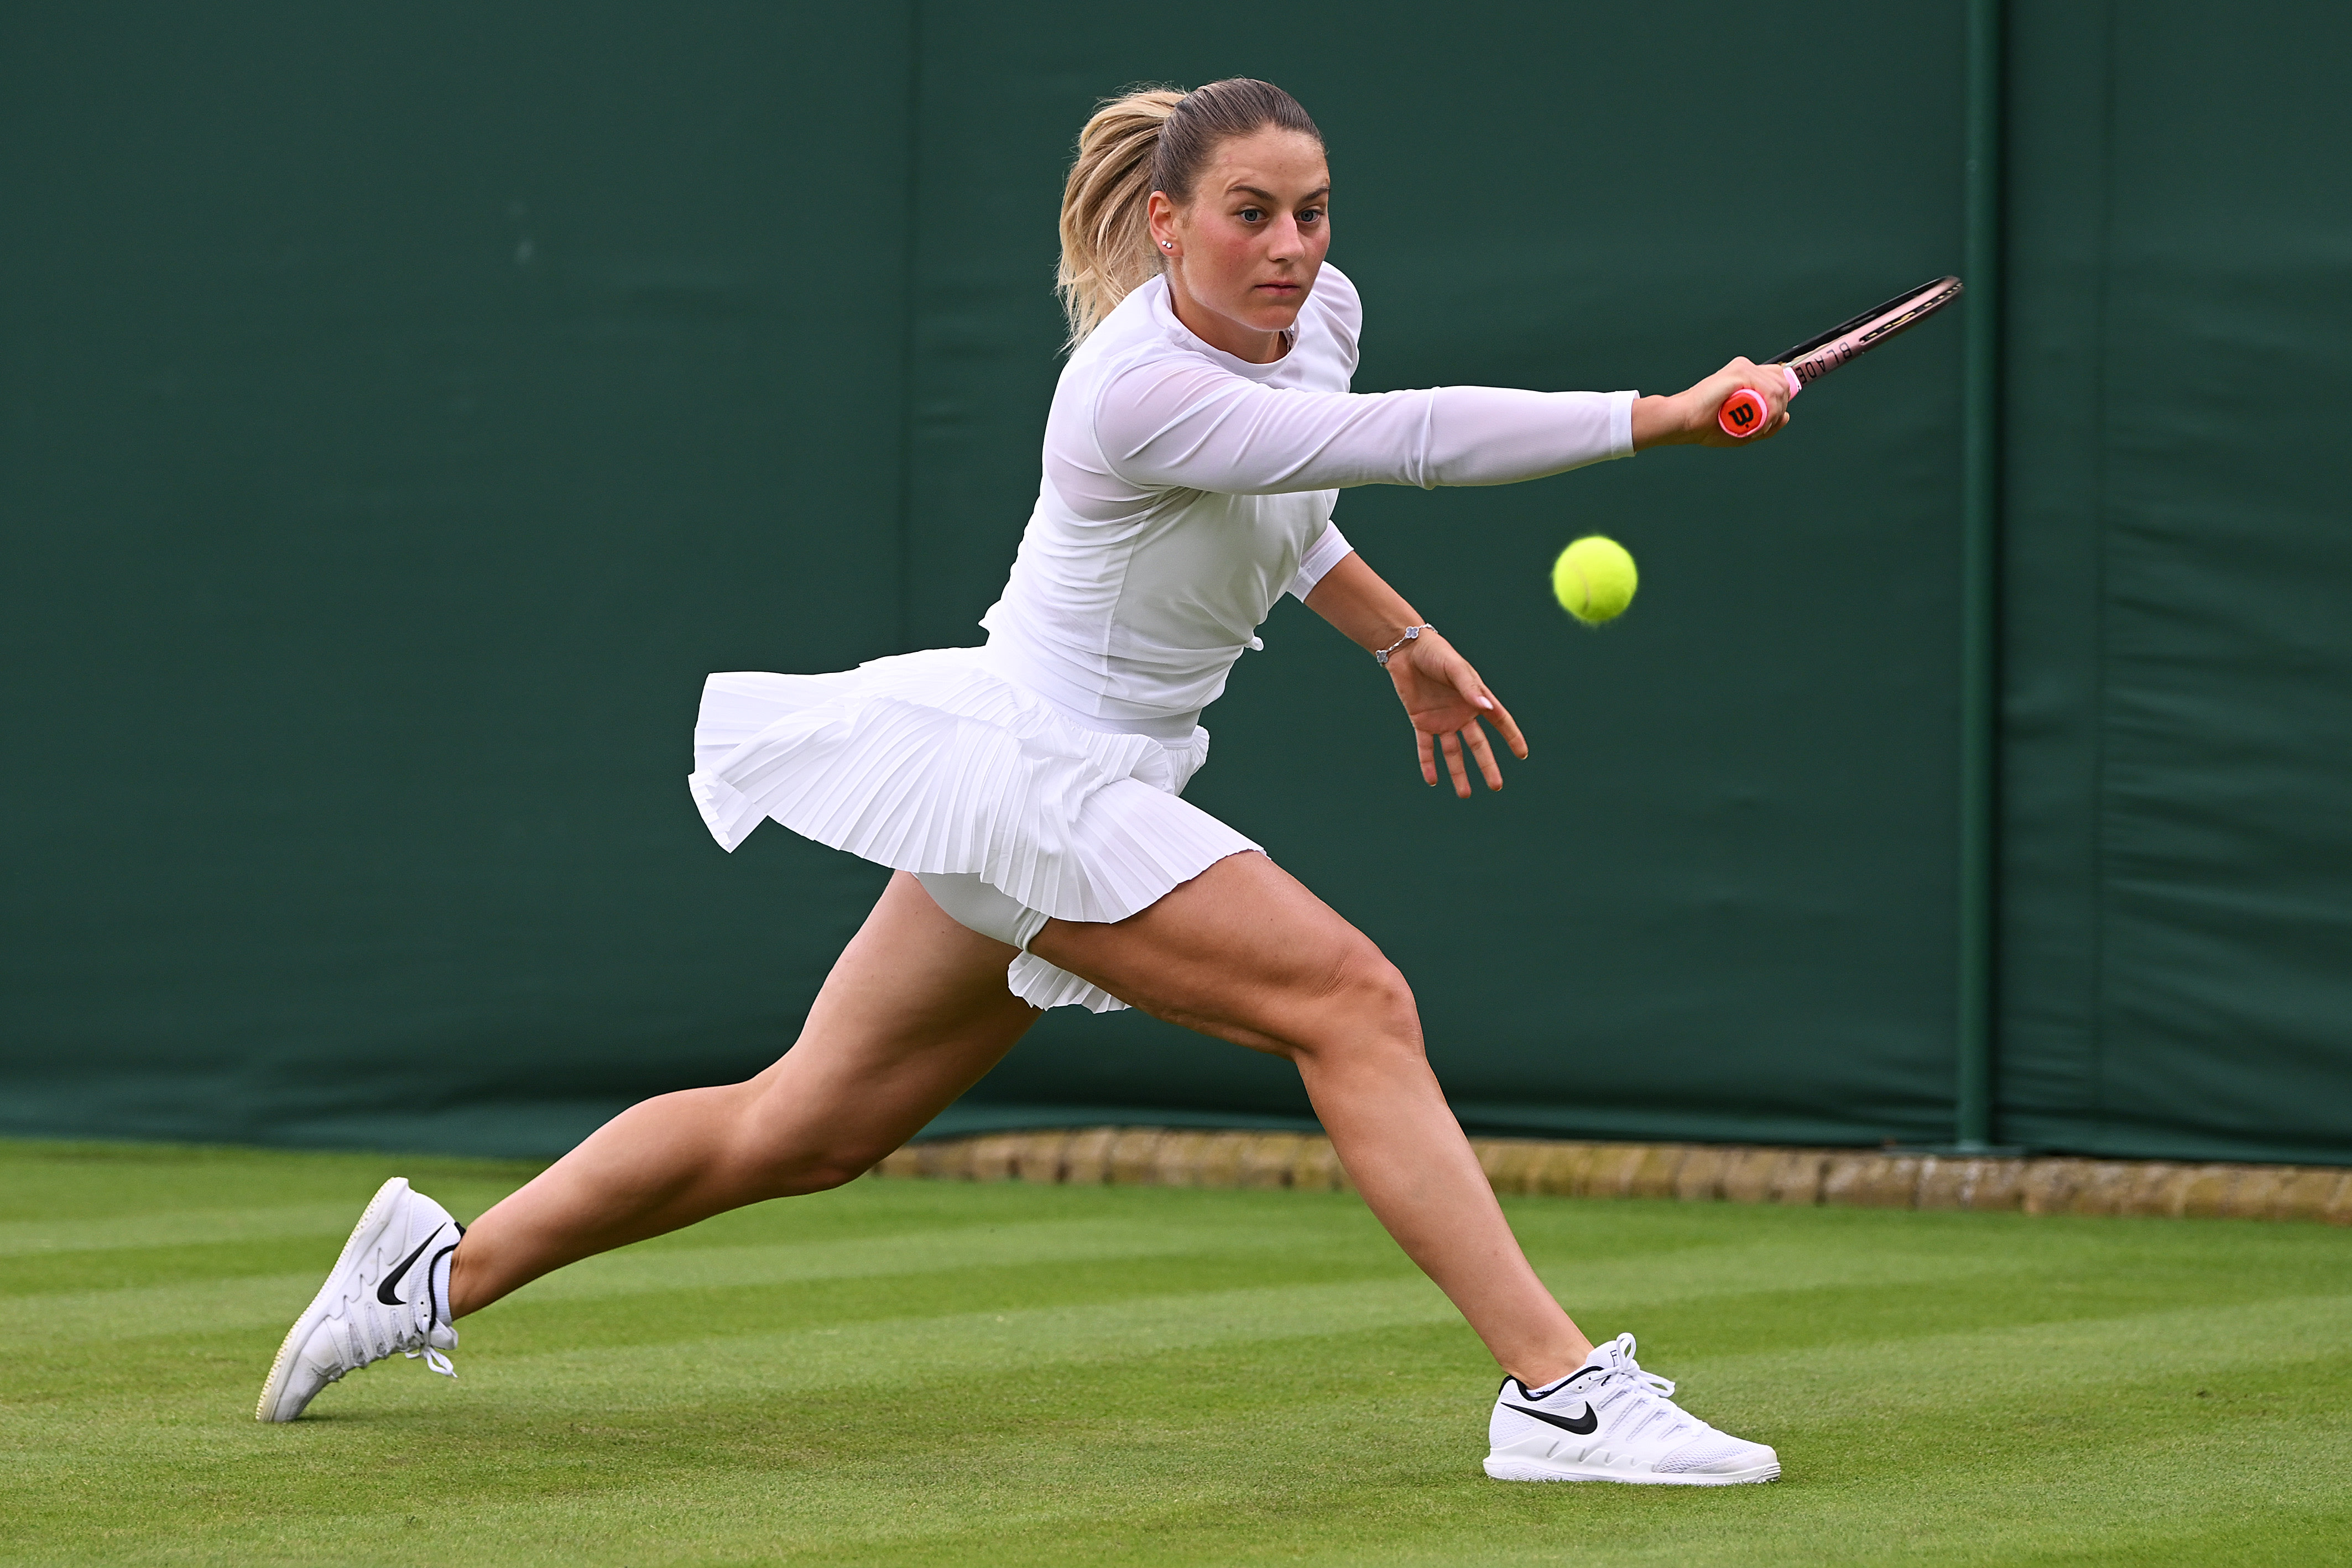 Sport is politics” Marta Kostyuk lauds Wimbledon decision to ban Russian, Belarusian players